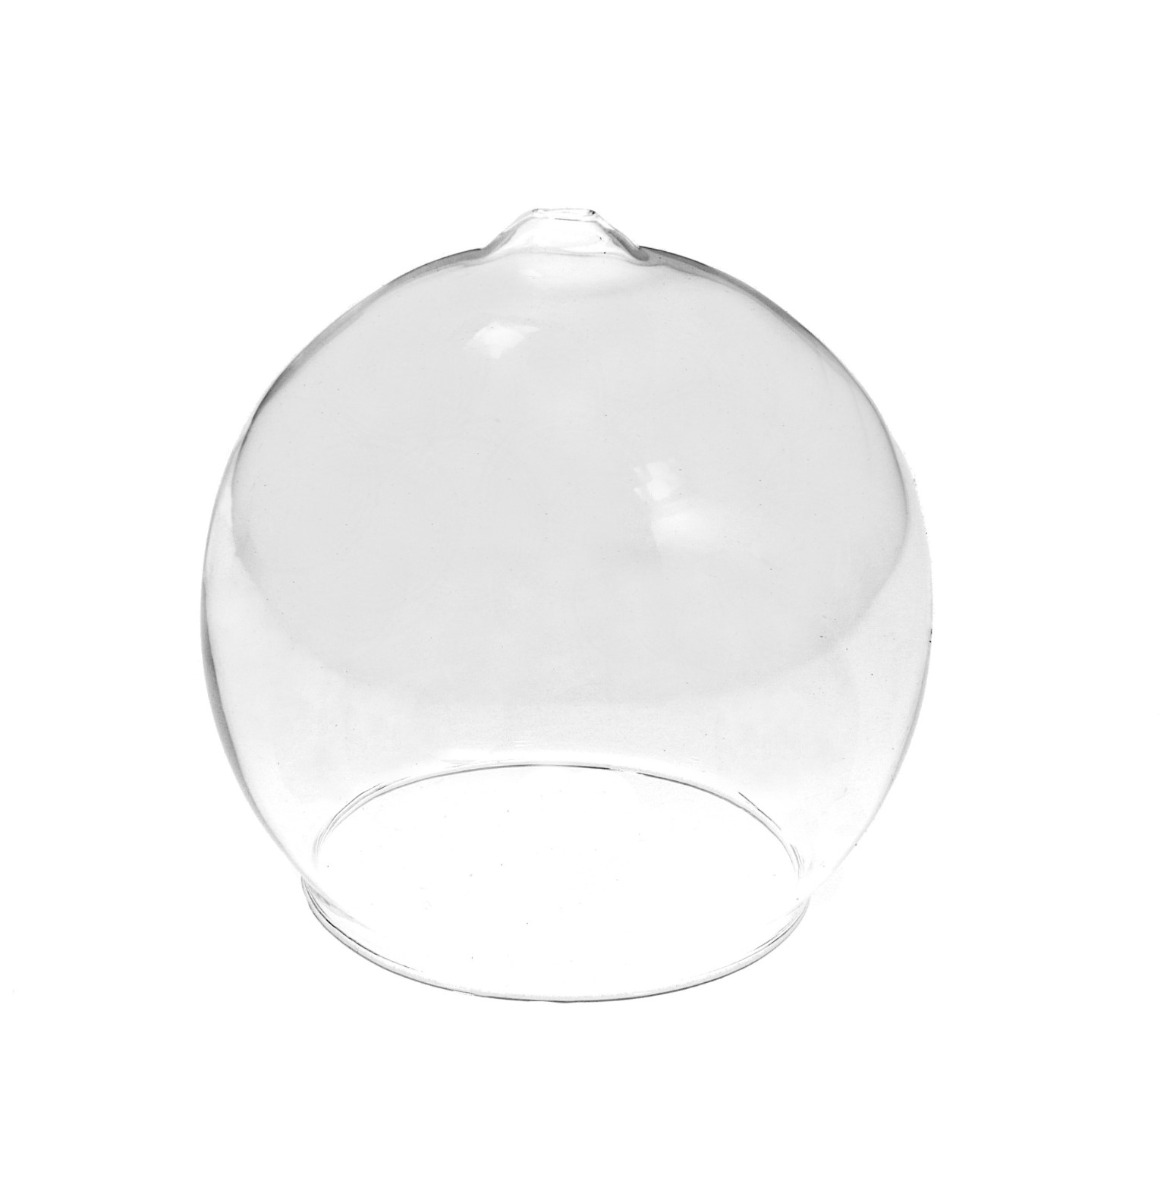 Glob sticla transparent forma cupola rotunda 6cm in cutie carton 357008